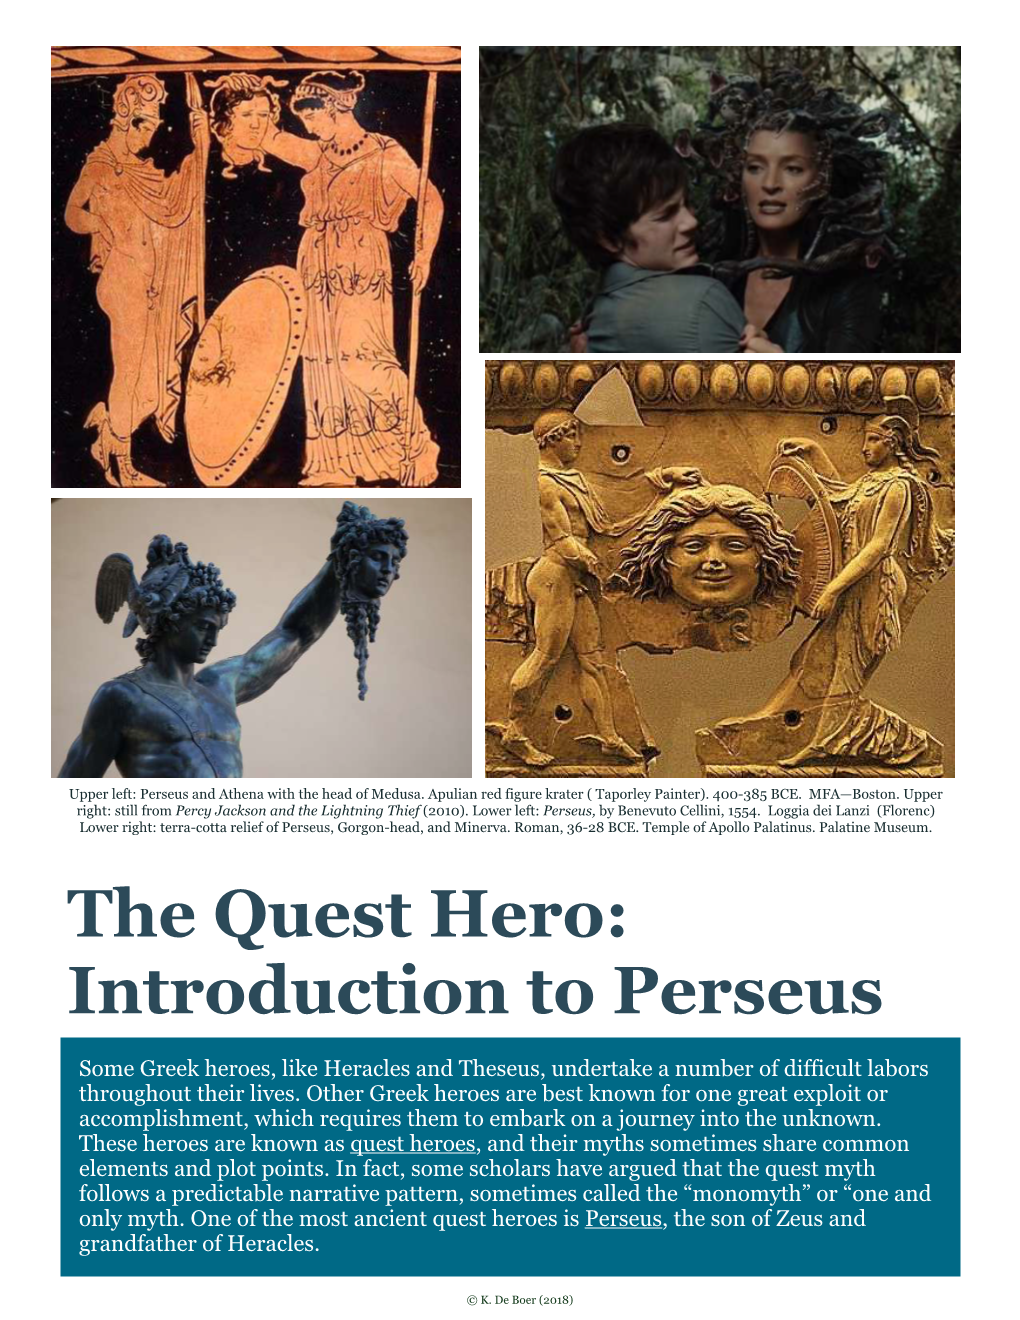 Quest Heroes Introduction to Perseus (De Boer)